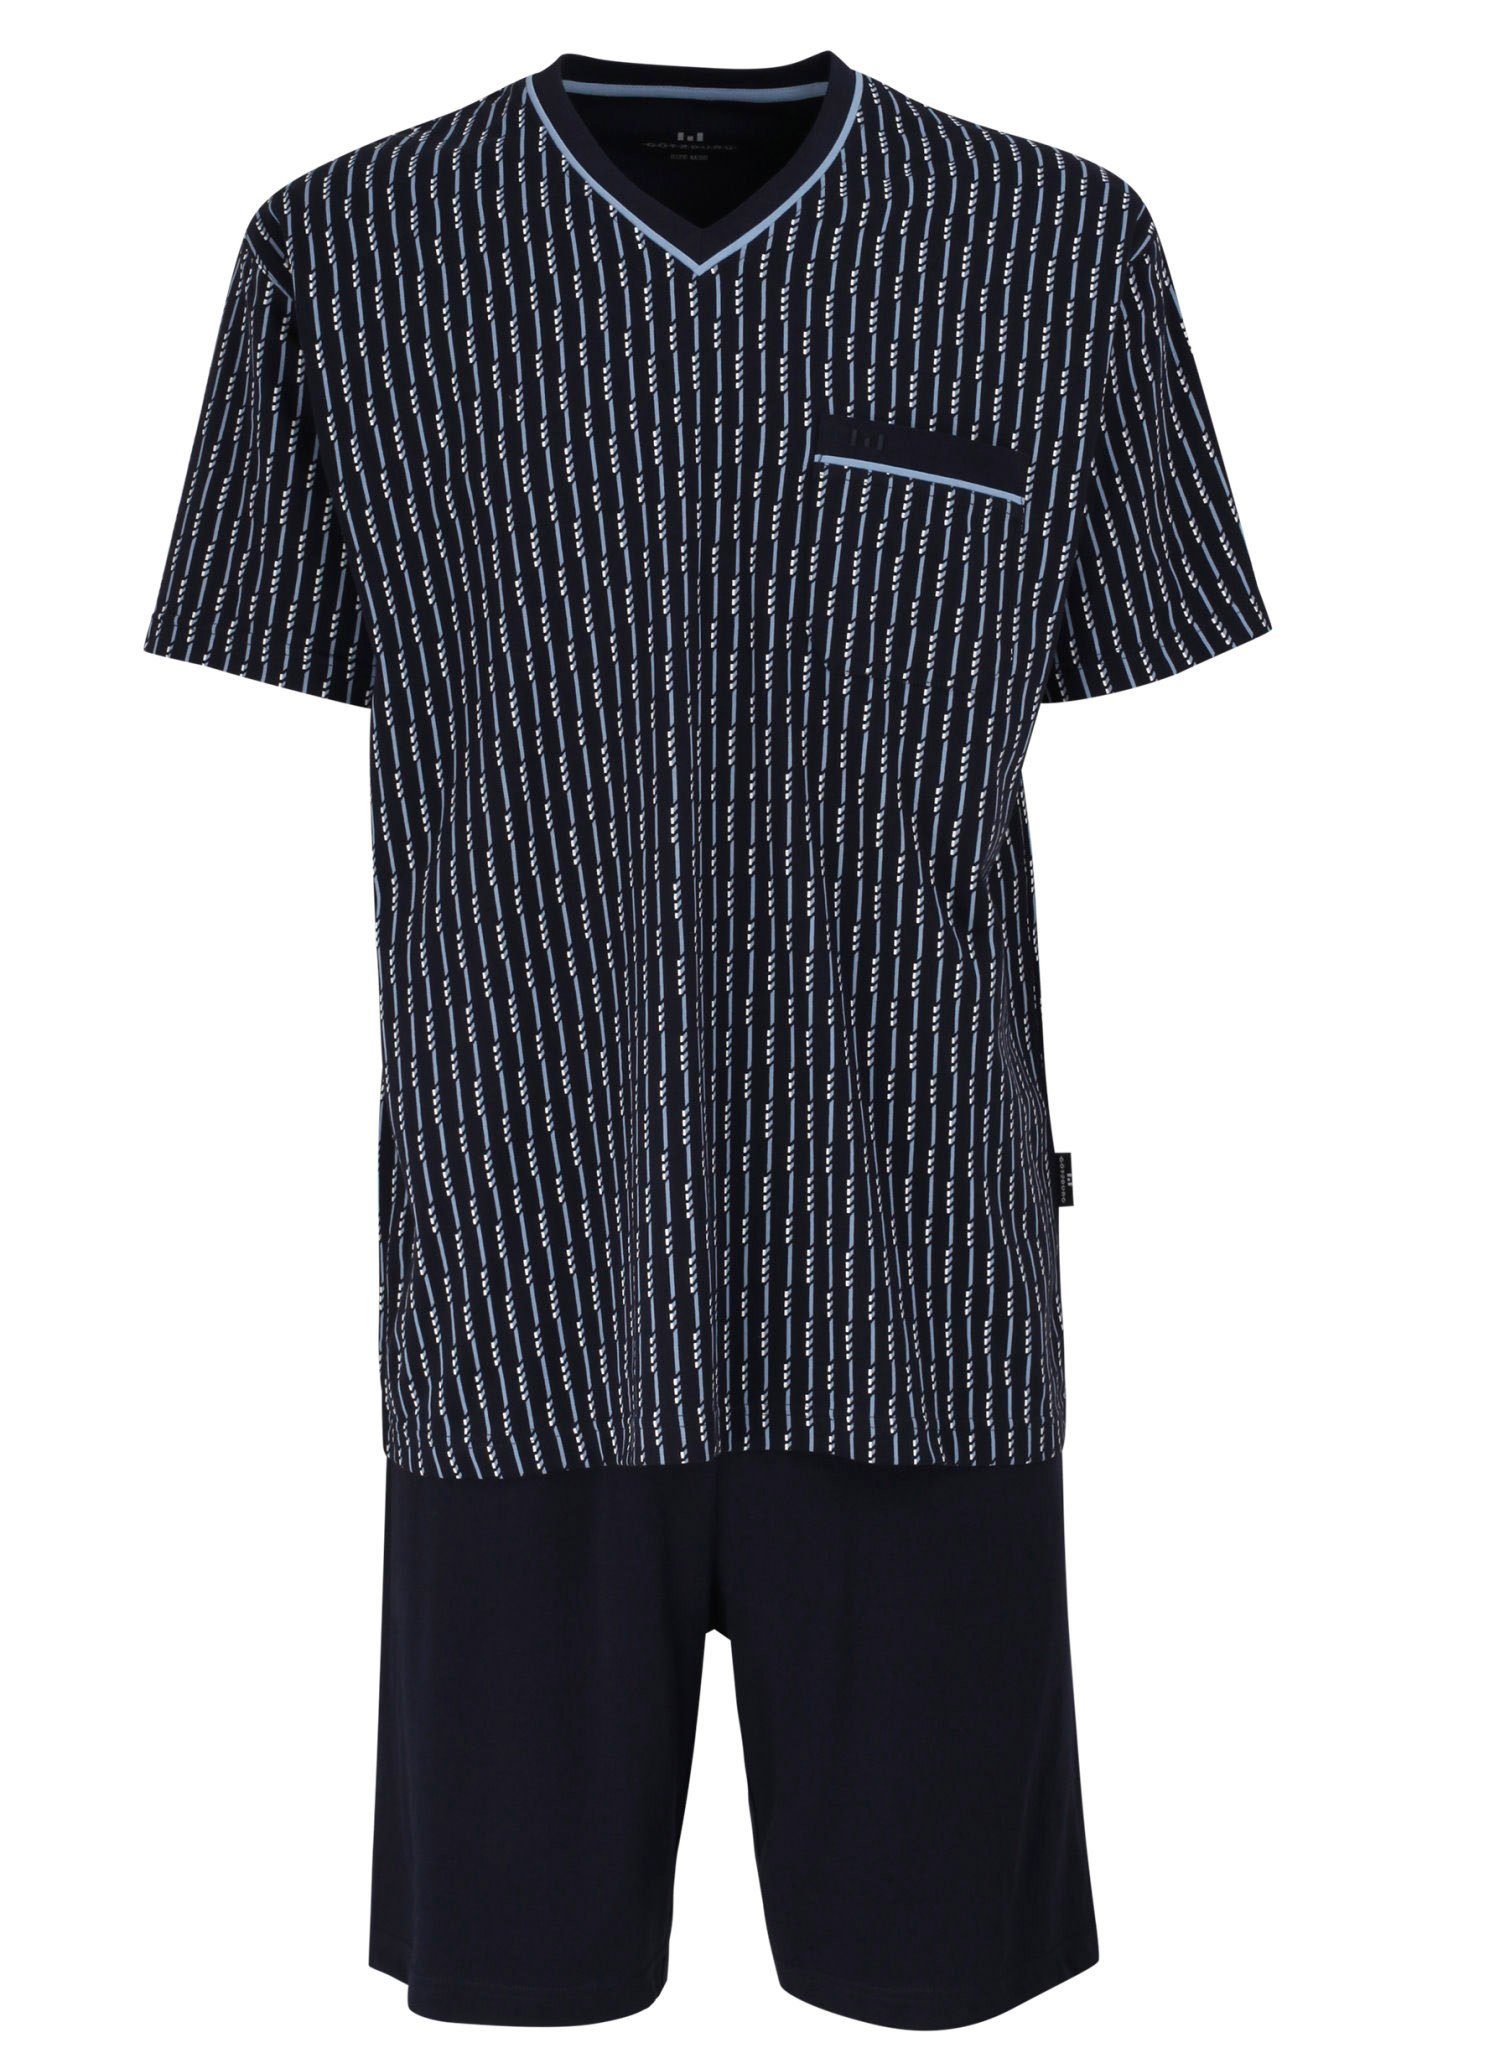 GÖTZBURG Pyjama Herren Schlafanzug Baumwolle Queens kurz blau-dunkel-Allover